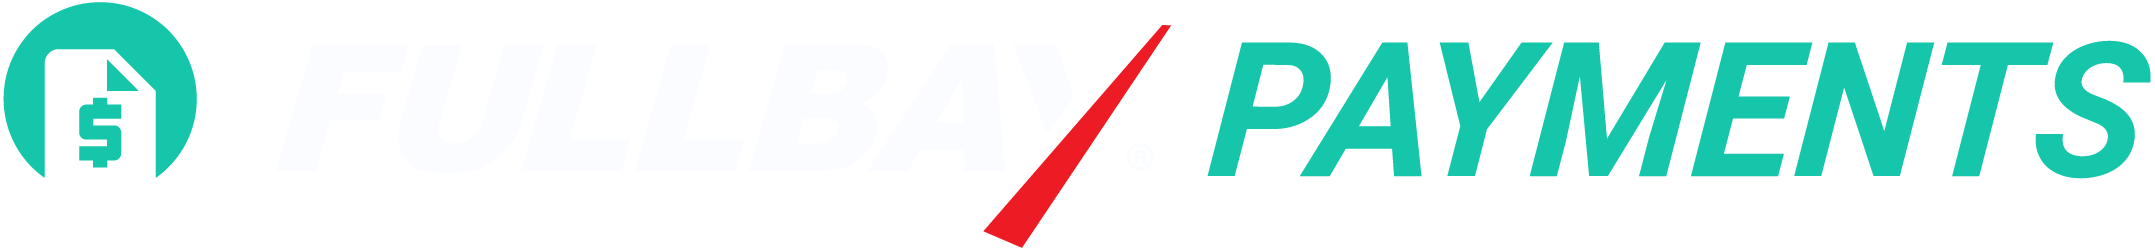 Fullbay_Payments-Logo-Dark-Mode